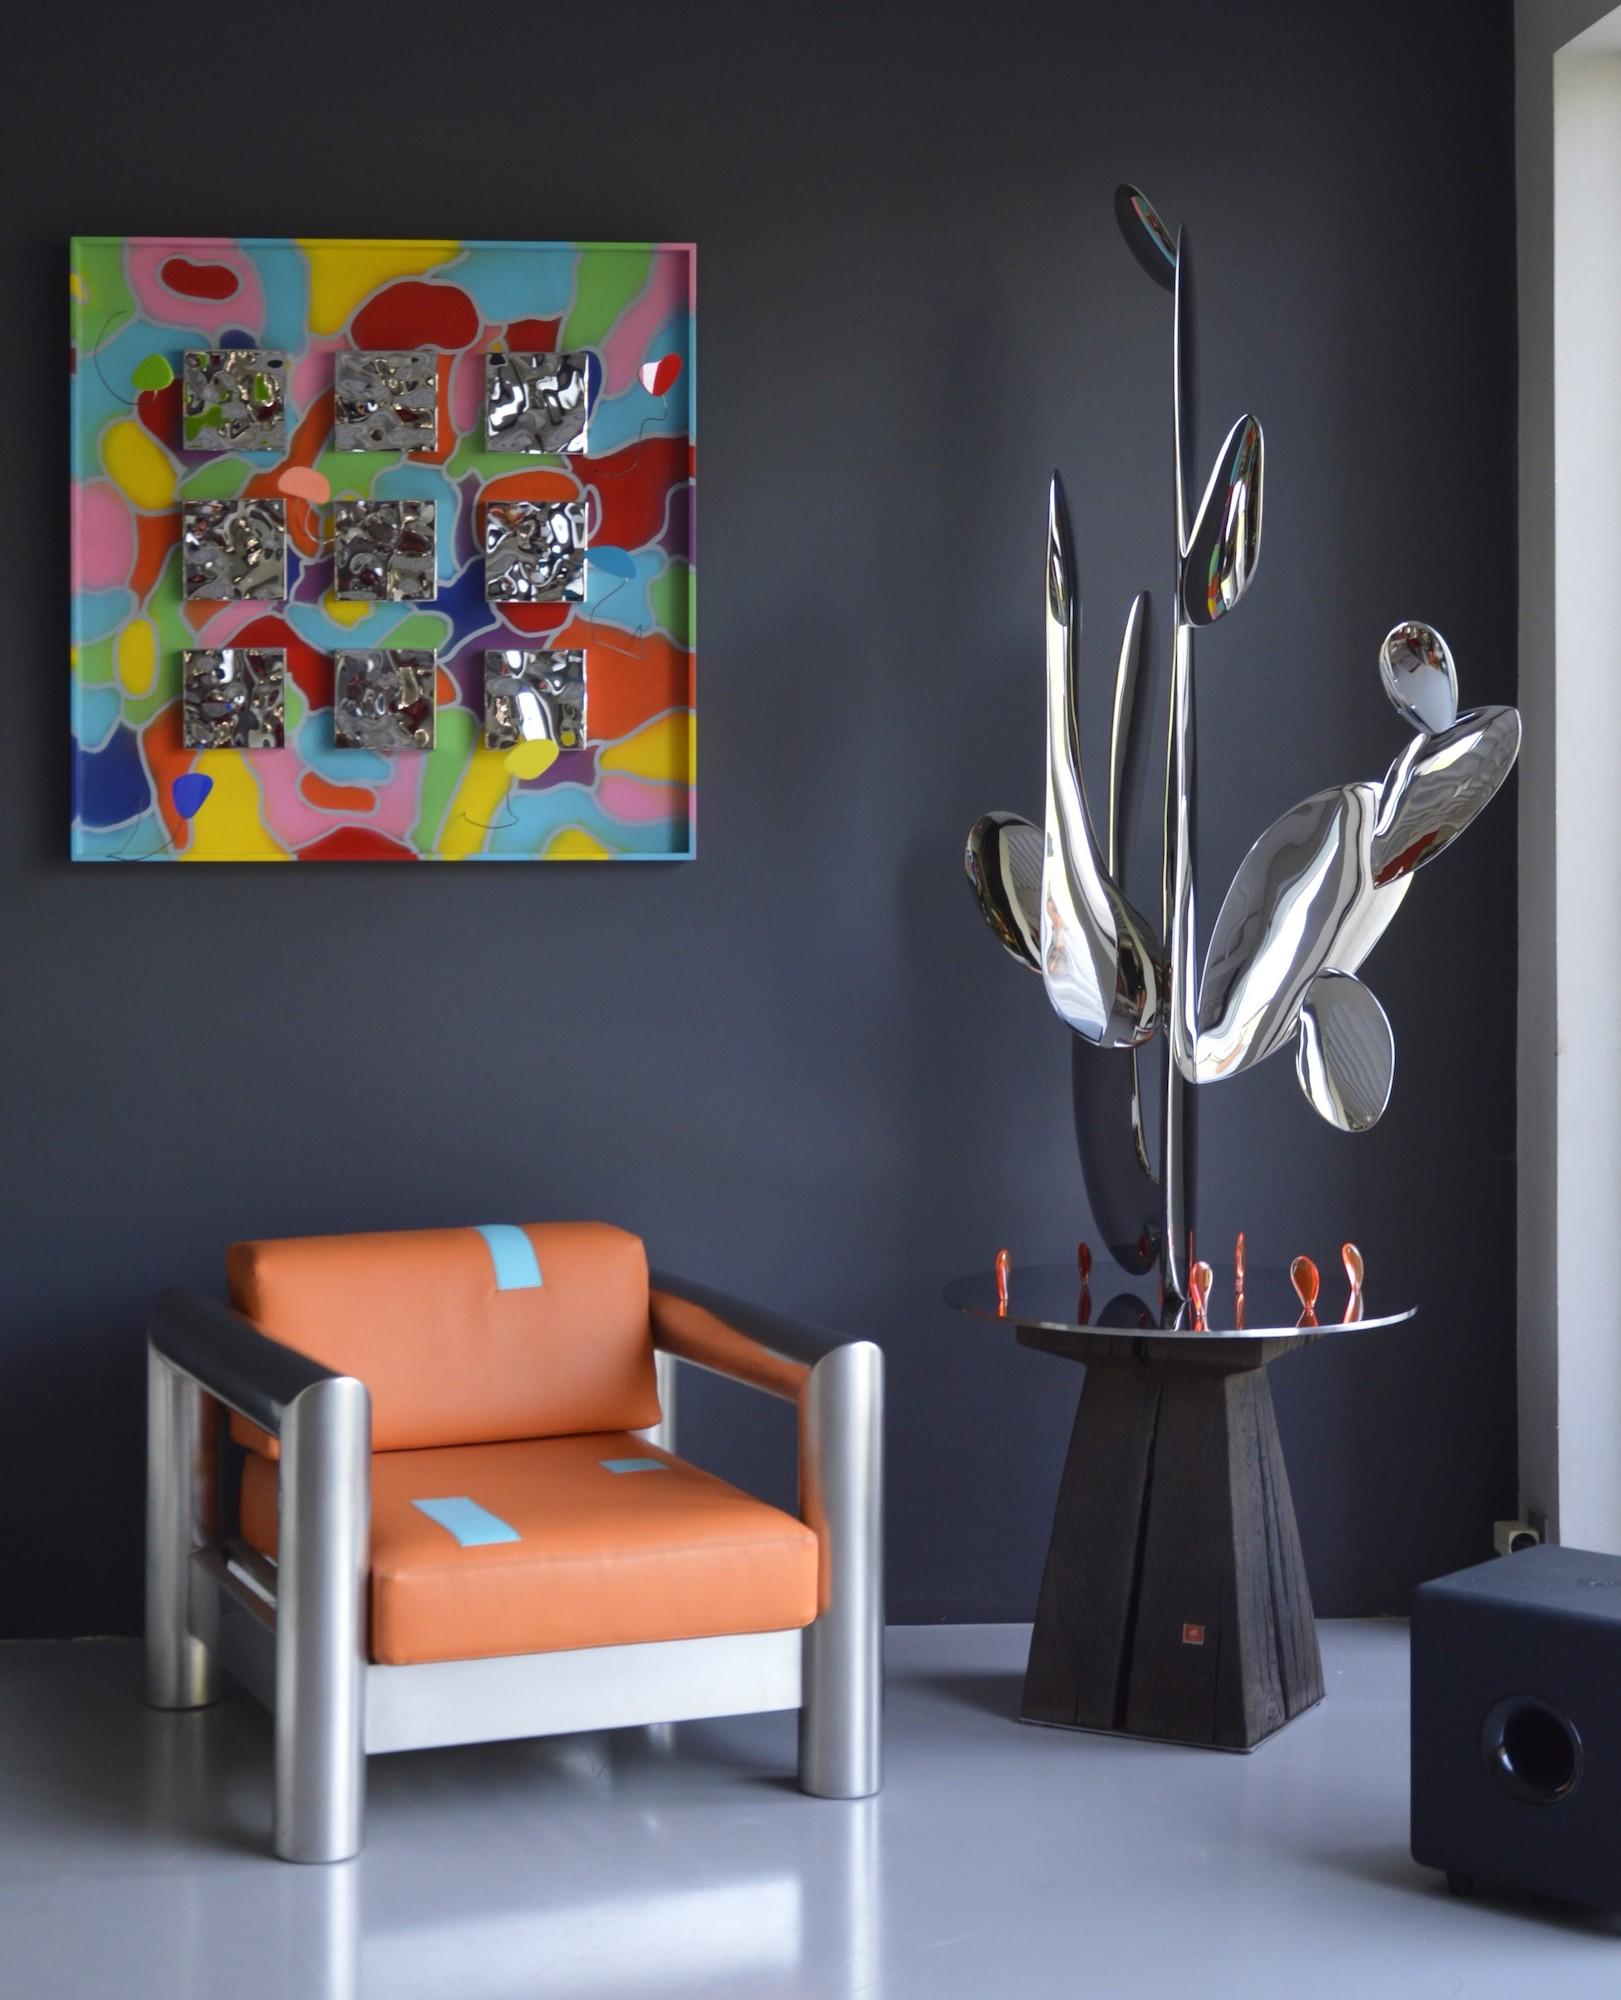 Kaktus by Franck K - Stainless steel sculpture, reflections, light, vision For Sale 4